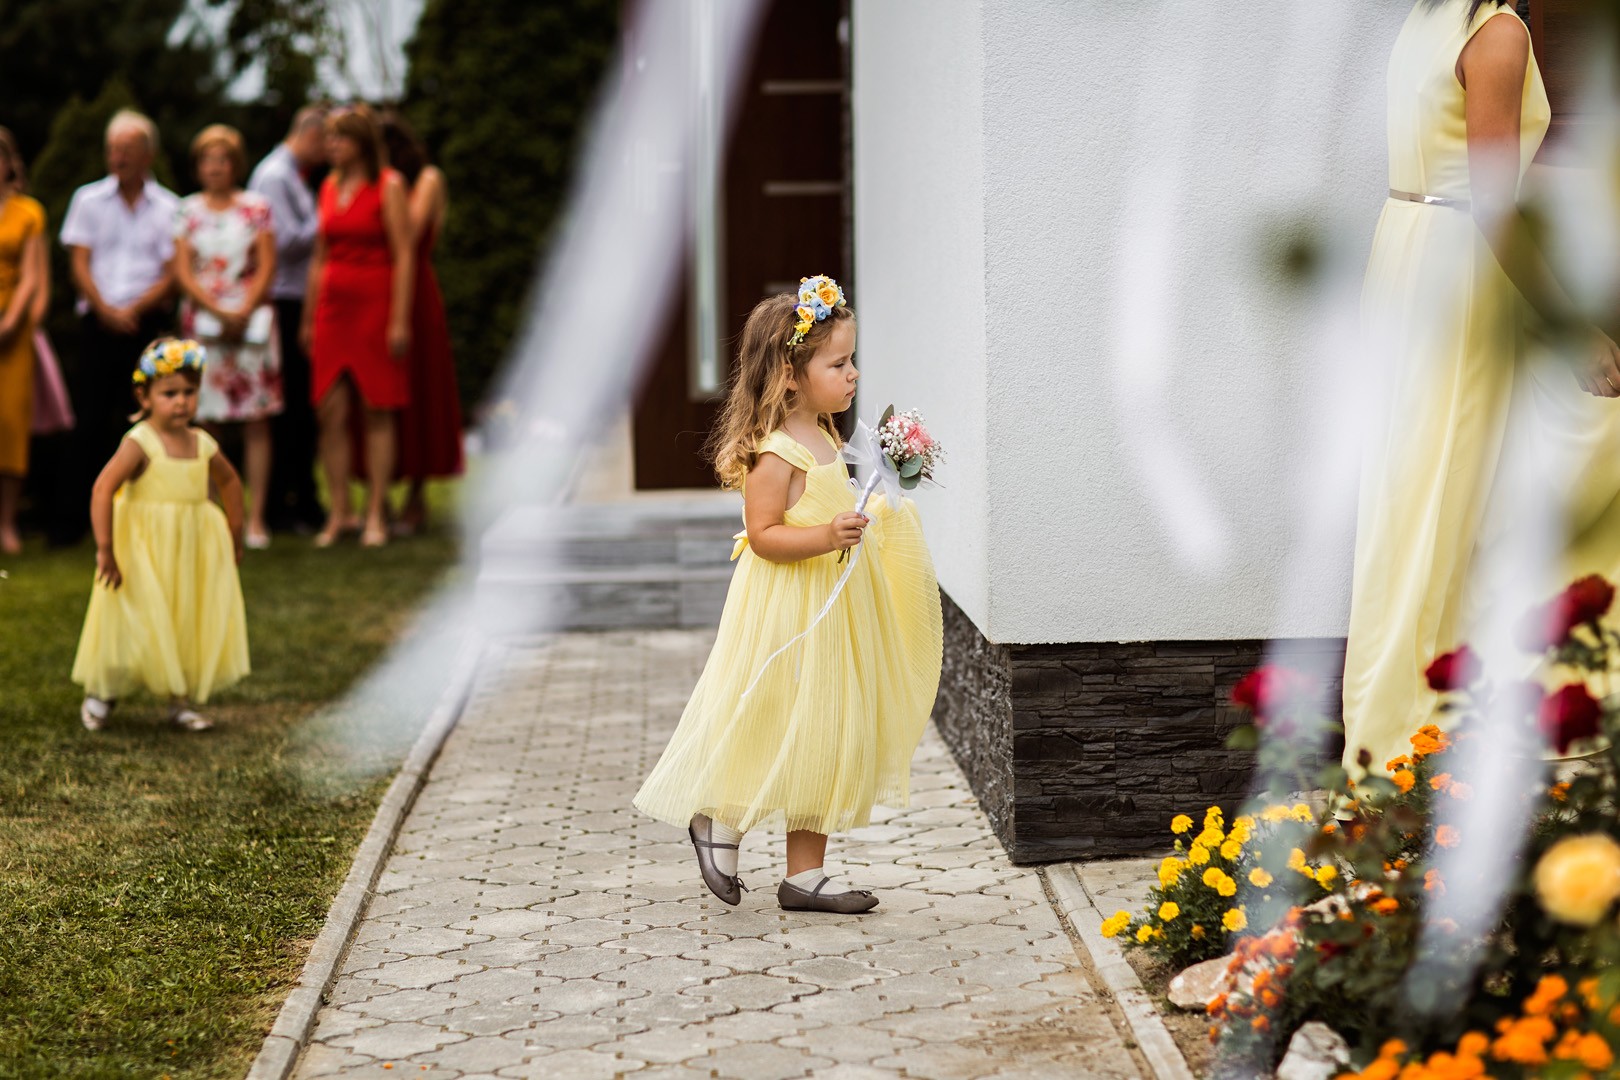 Wedding photos from the wedding day of Miška and Stanka. - 0178.jpg